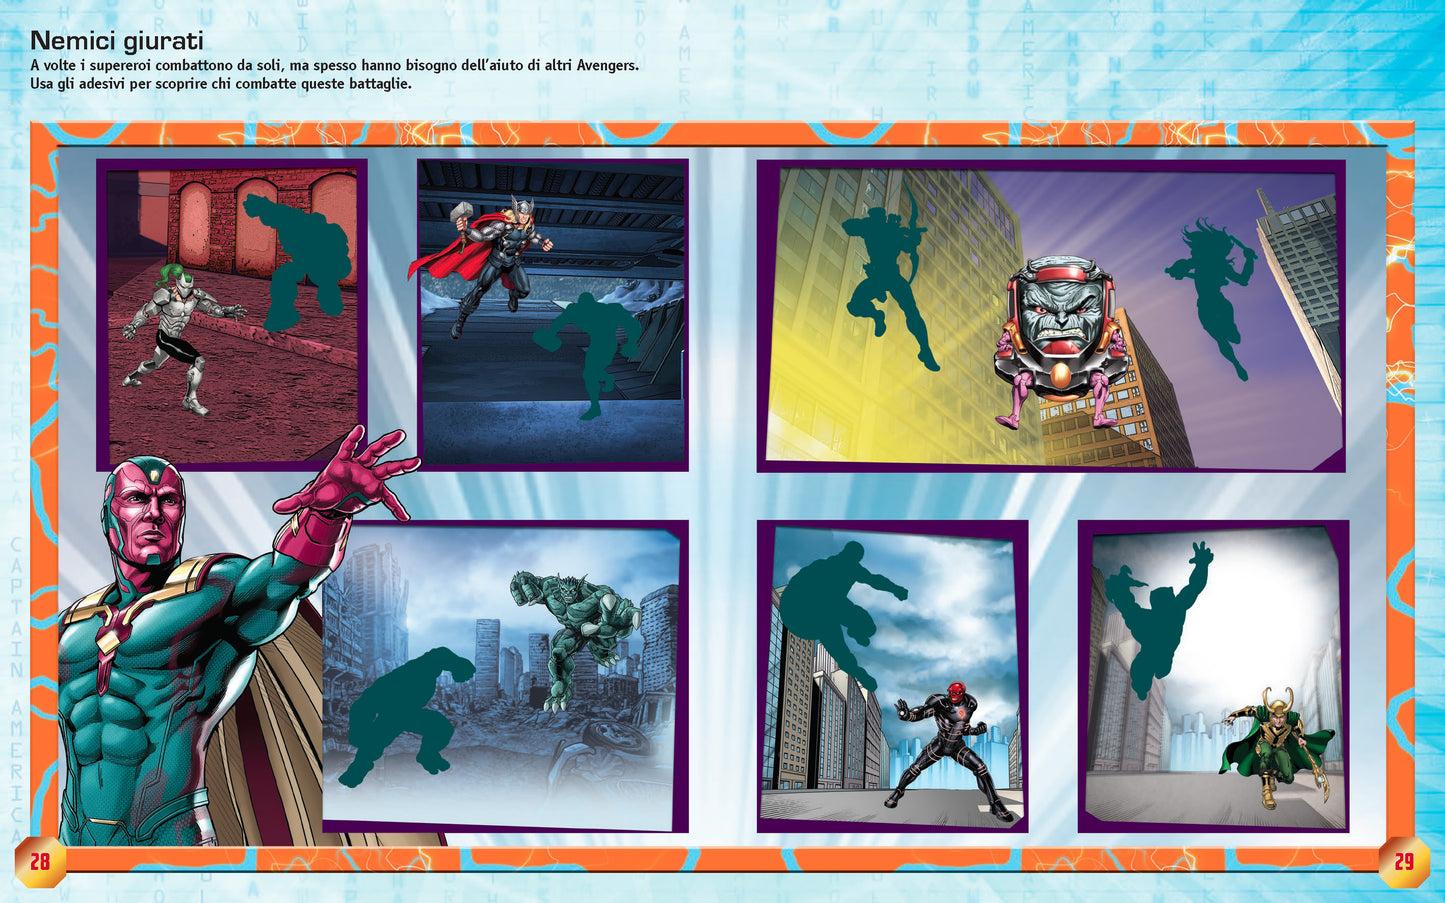 Super Staccattacca Special Marvel Avengers. Più di 150 adesivi